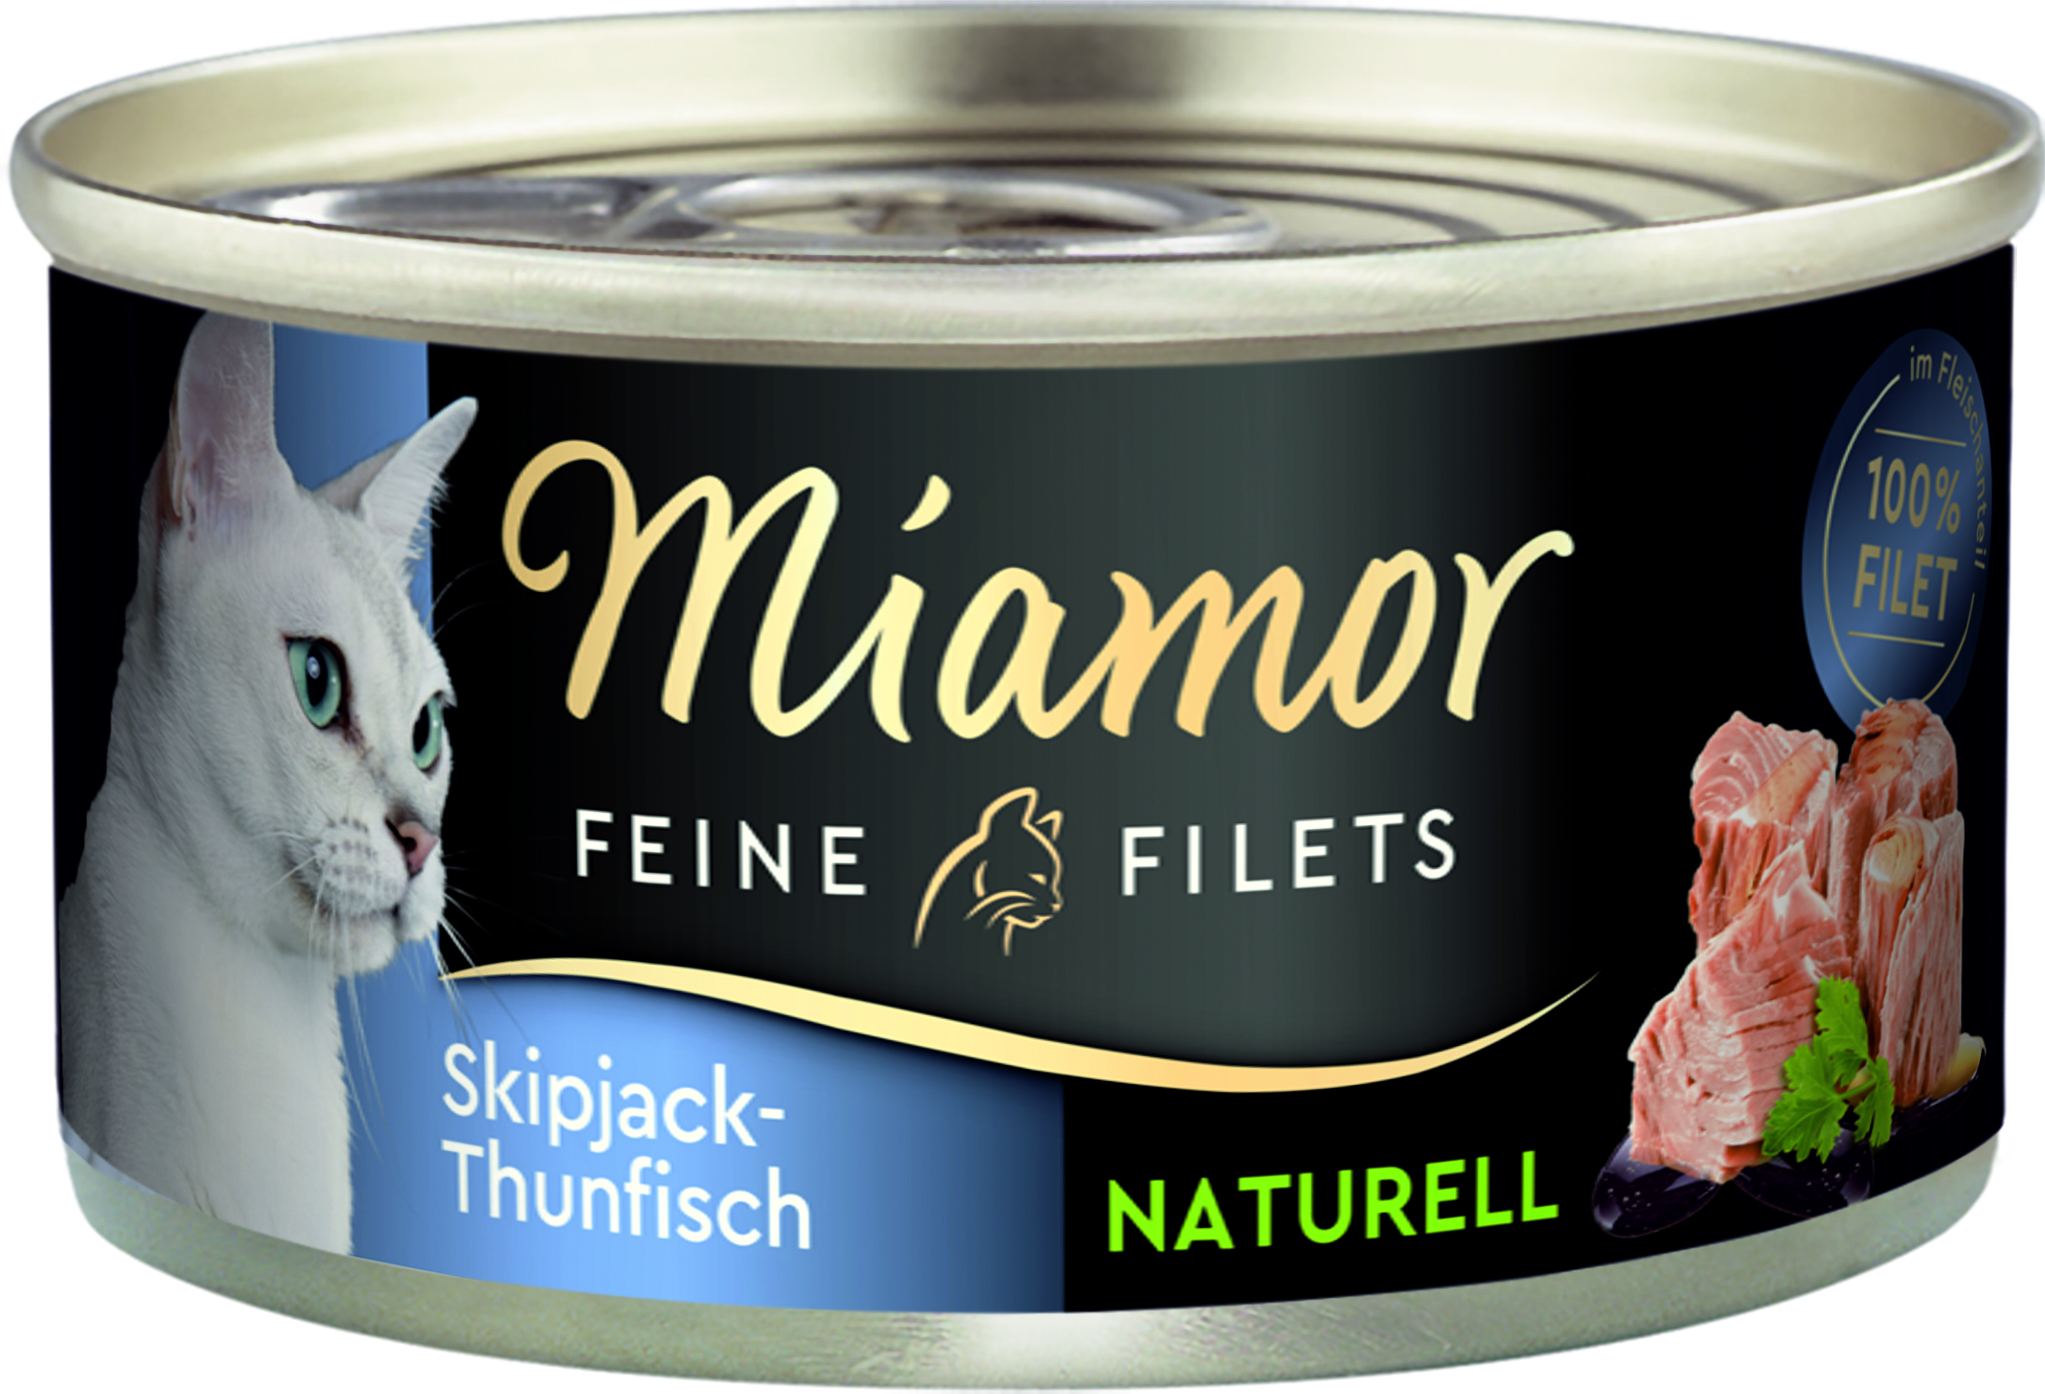 Miamor Feine Filets Naturell Skipjack-Thunfisch 80g